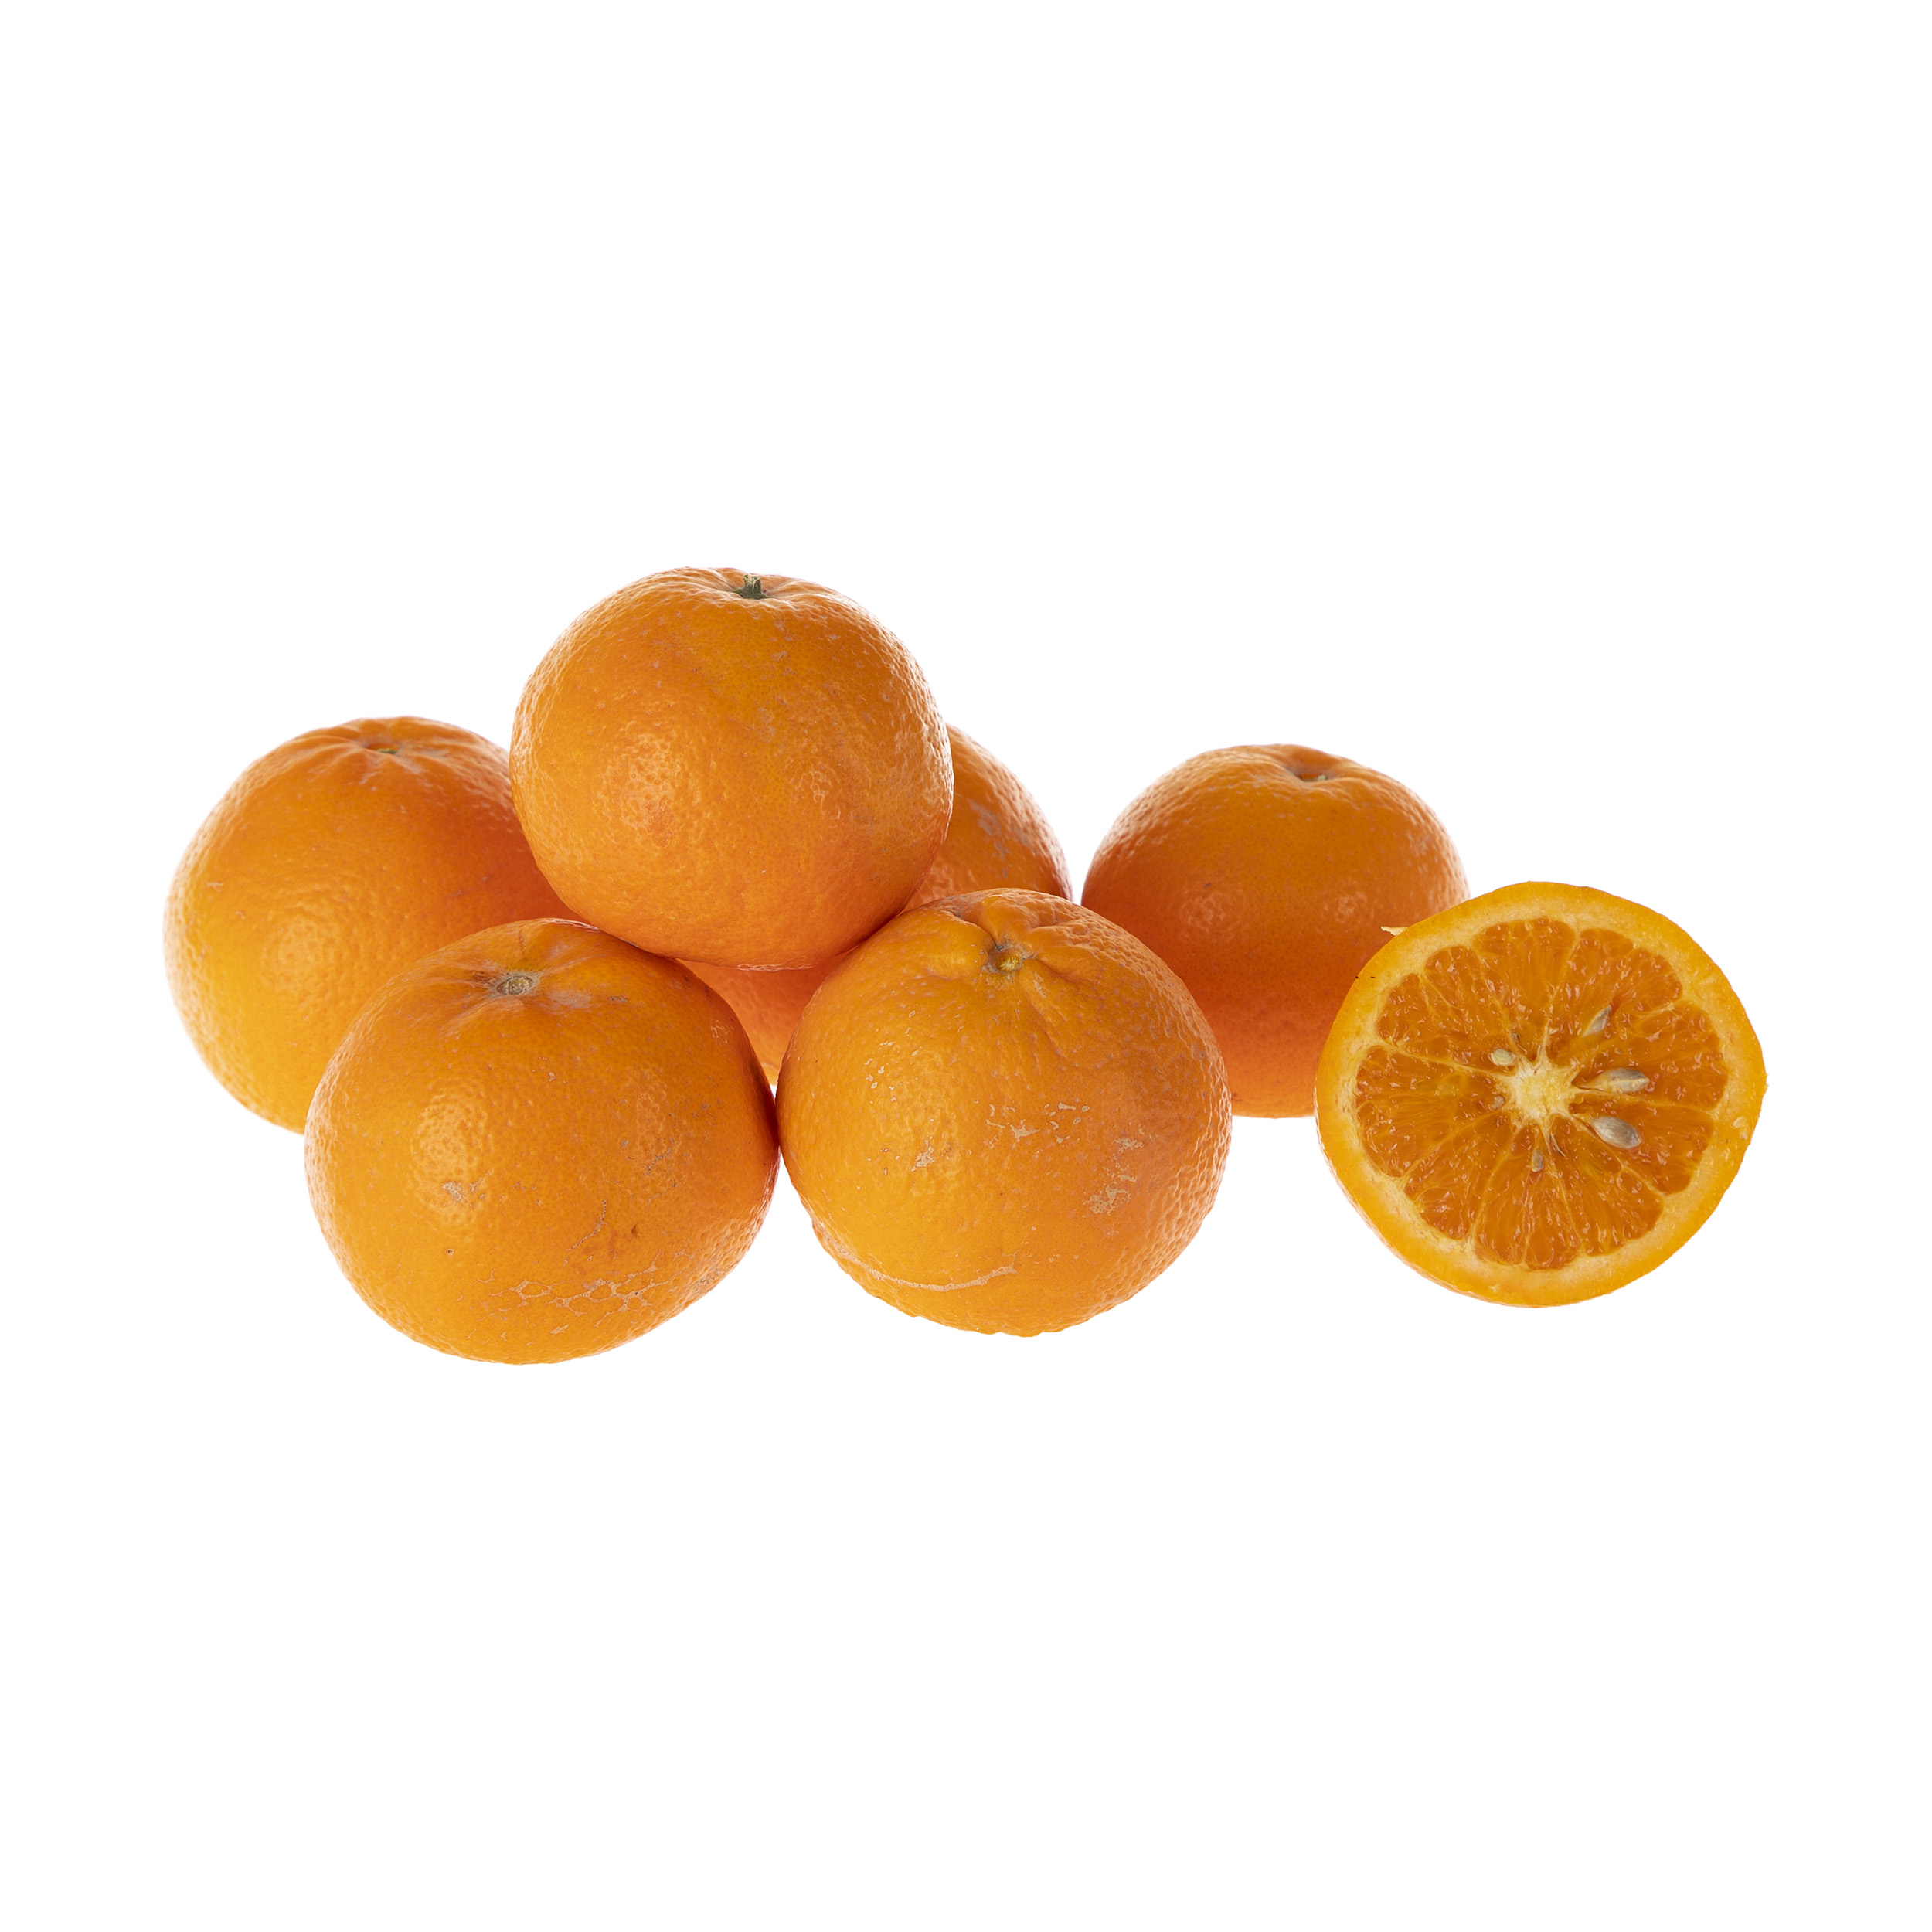 نارنگی ویژه نوروز - 3 کیلوگرم (حداقل 20 عدد)